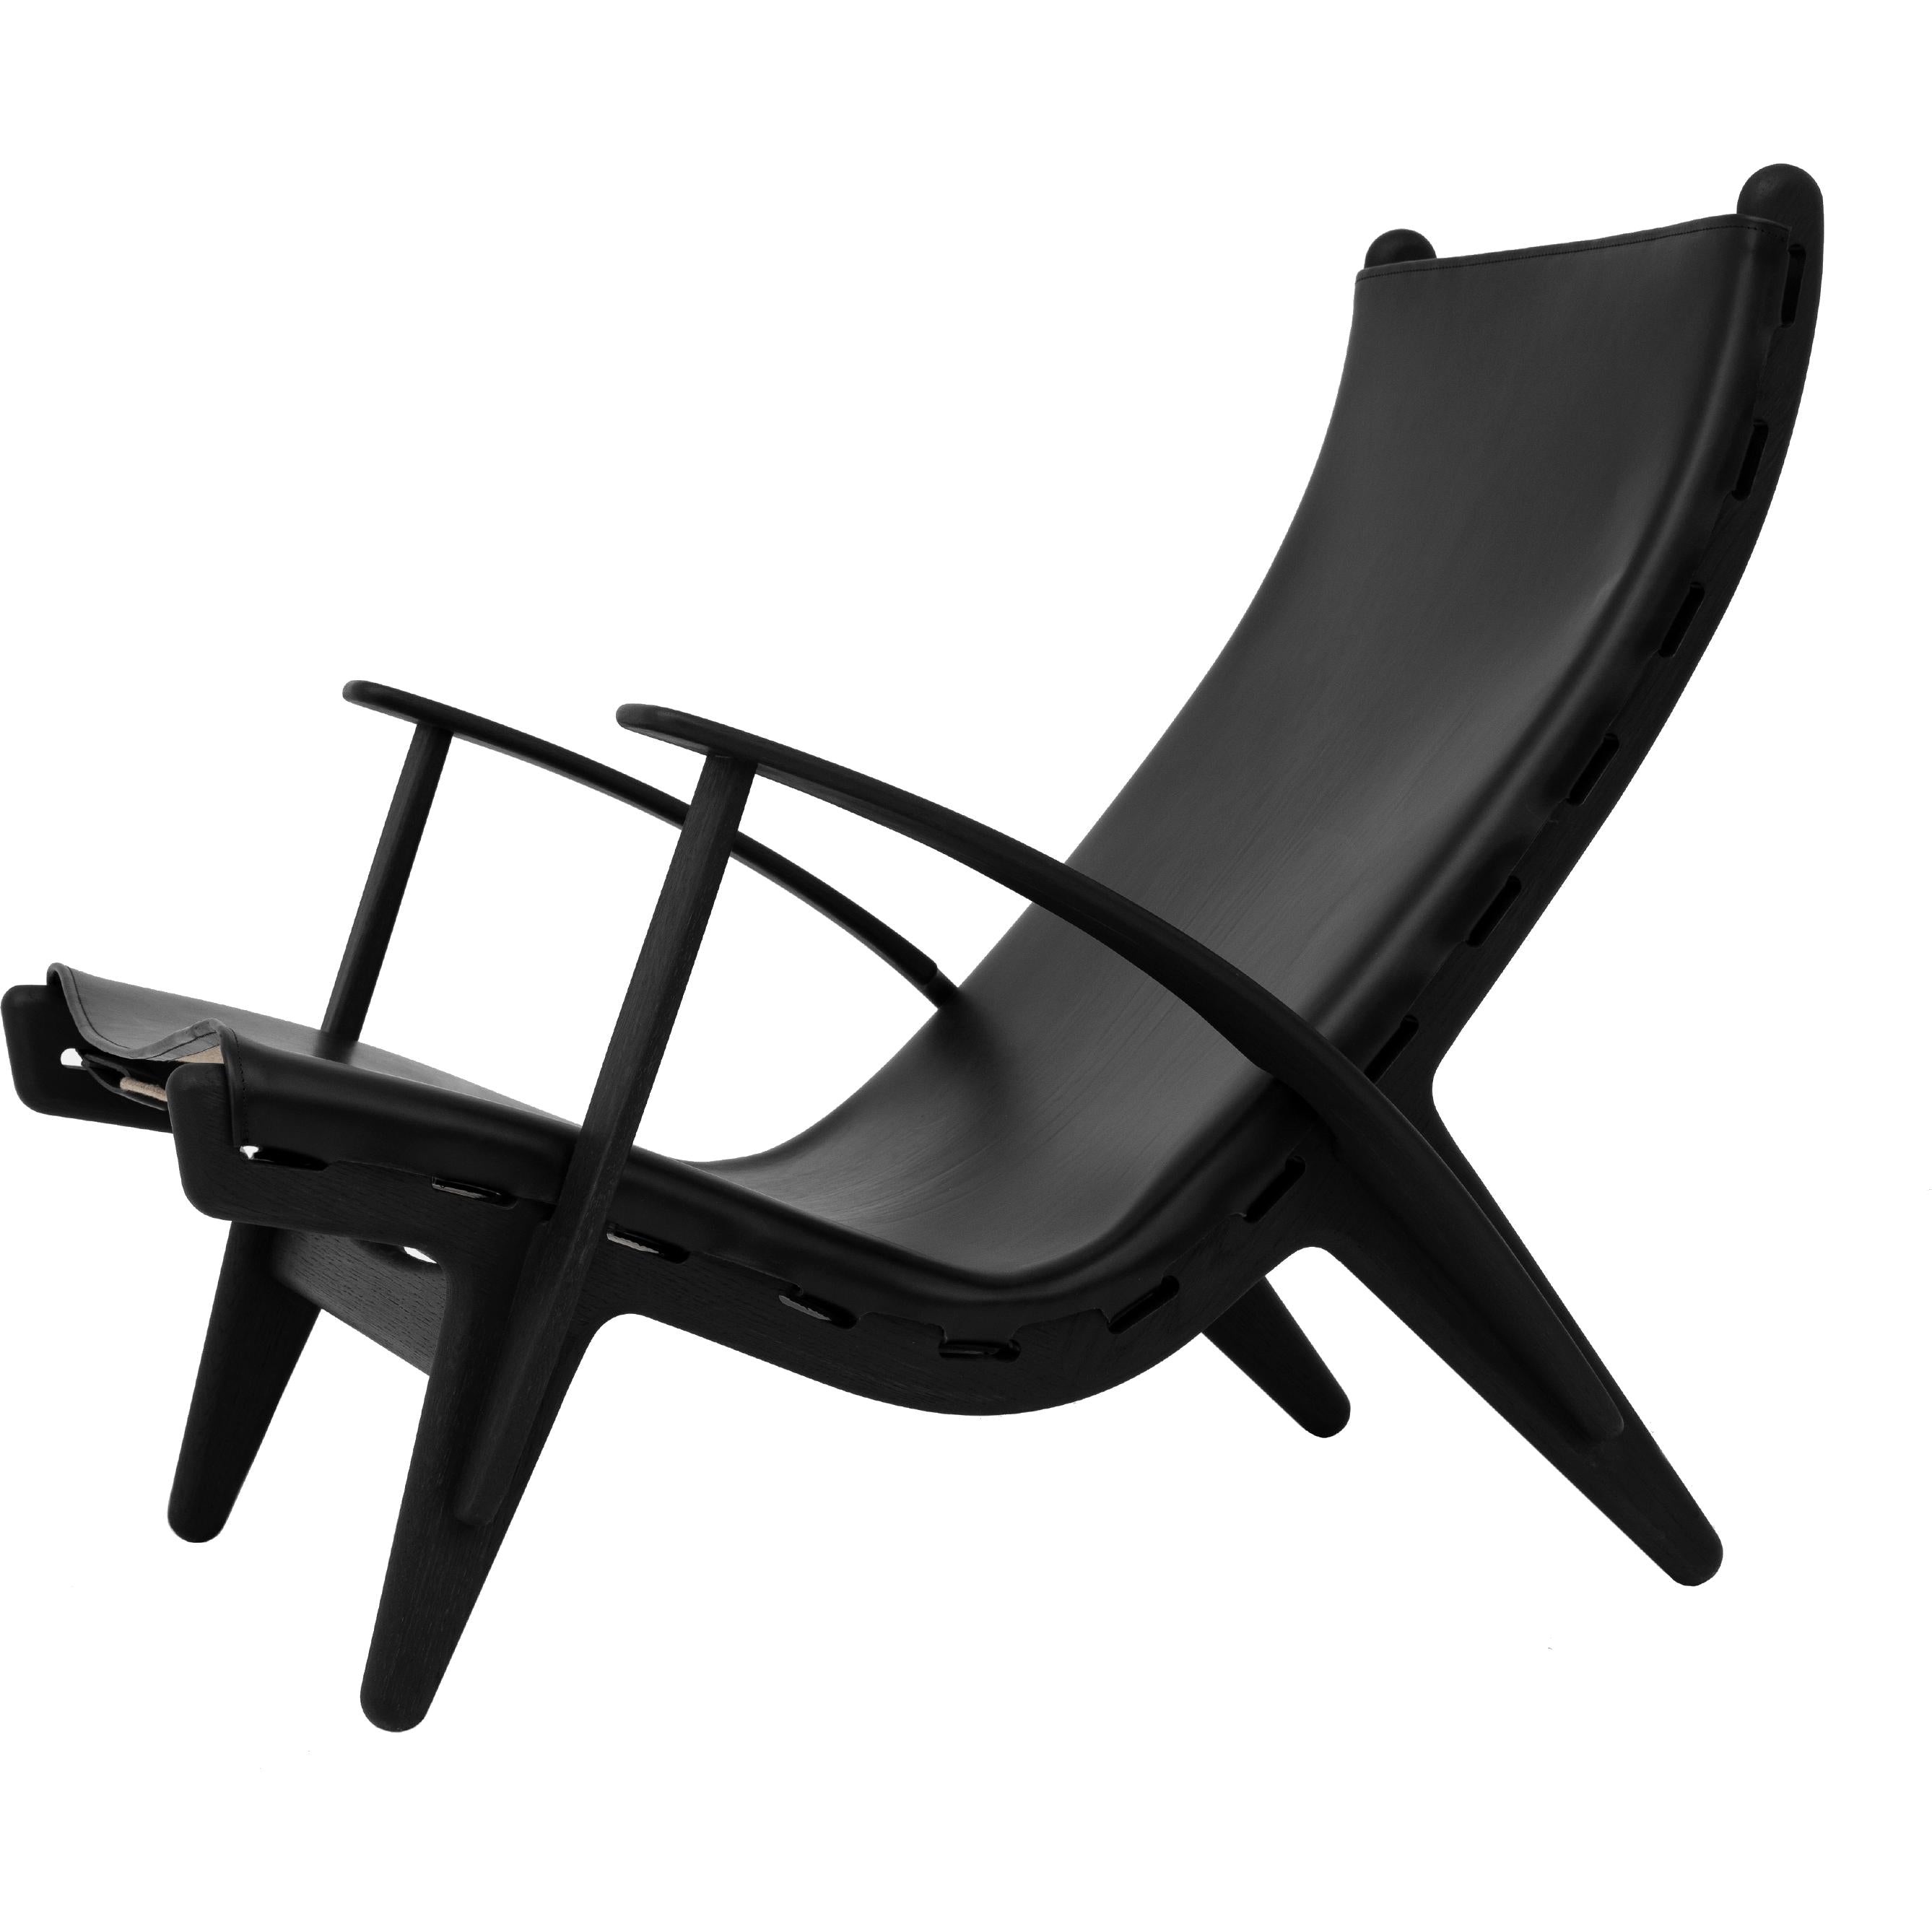 Klassik Studio PV King's stol sort eg farvet, sort læder